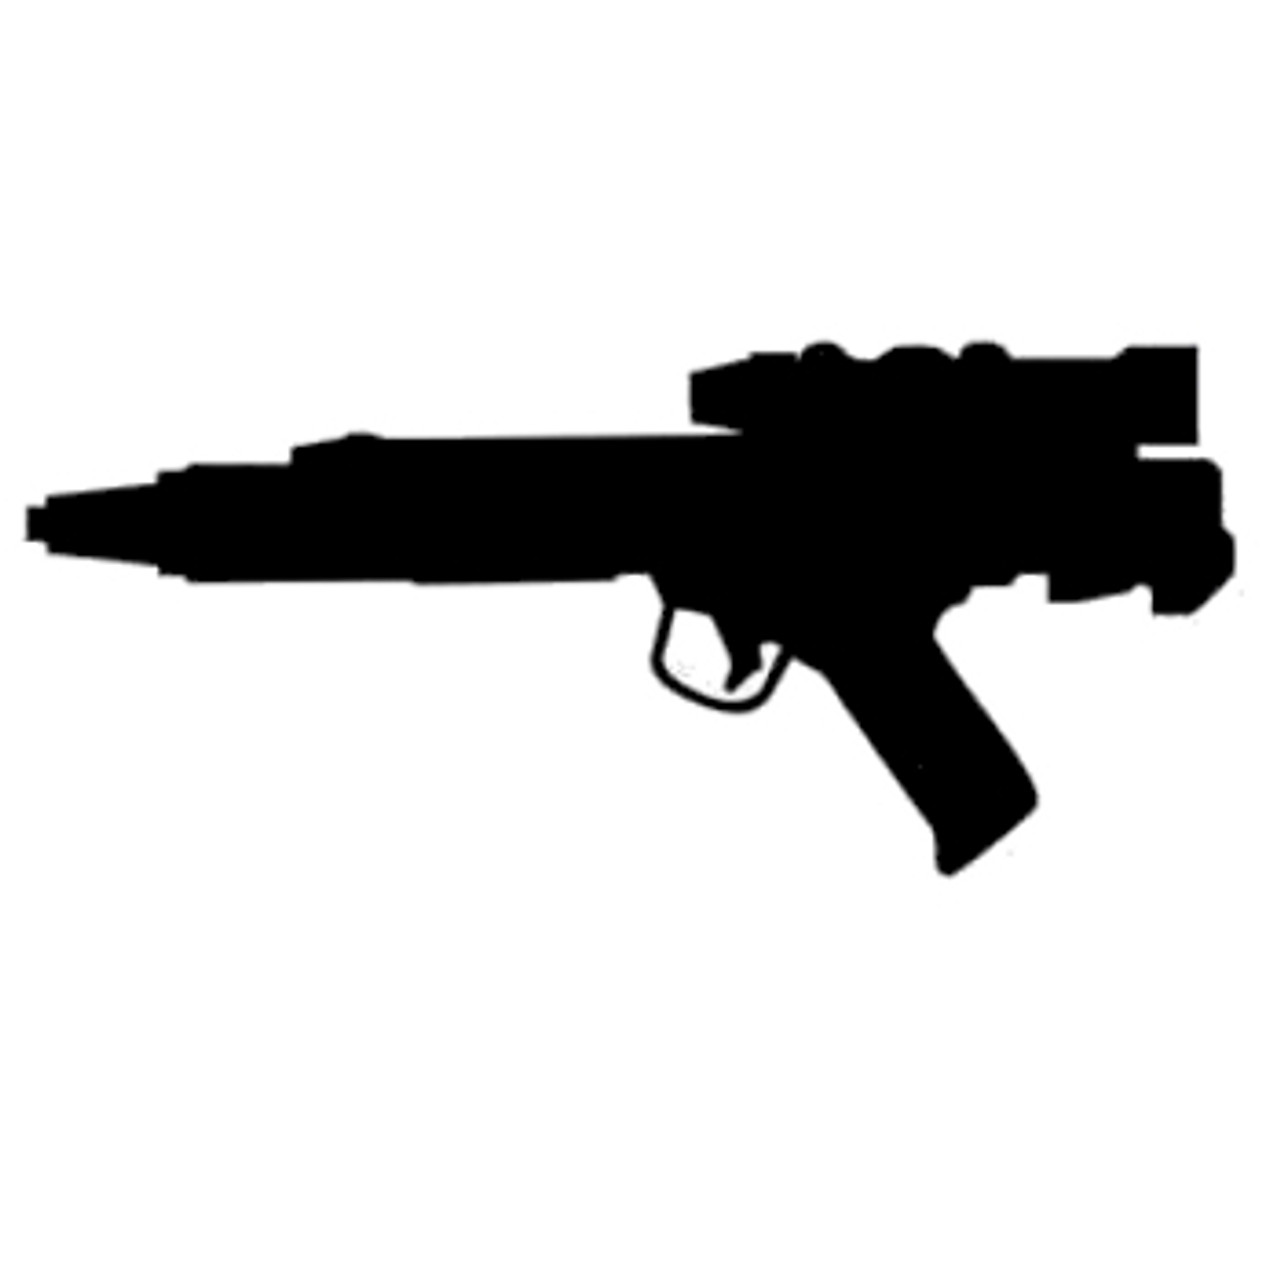 Blaster Star Wars Pistol Svg Png Icon Free Download (#555311